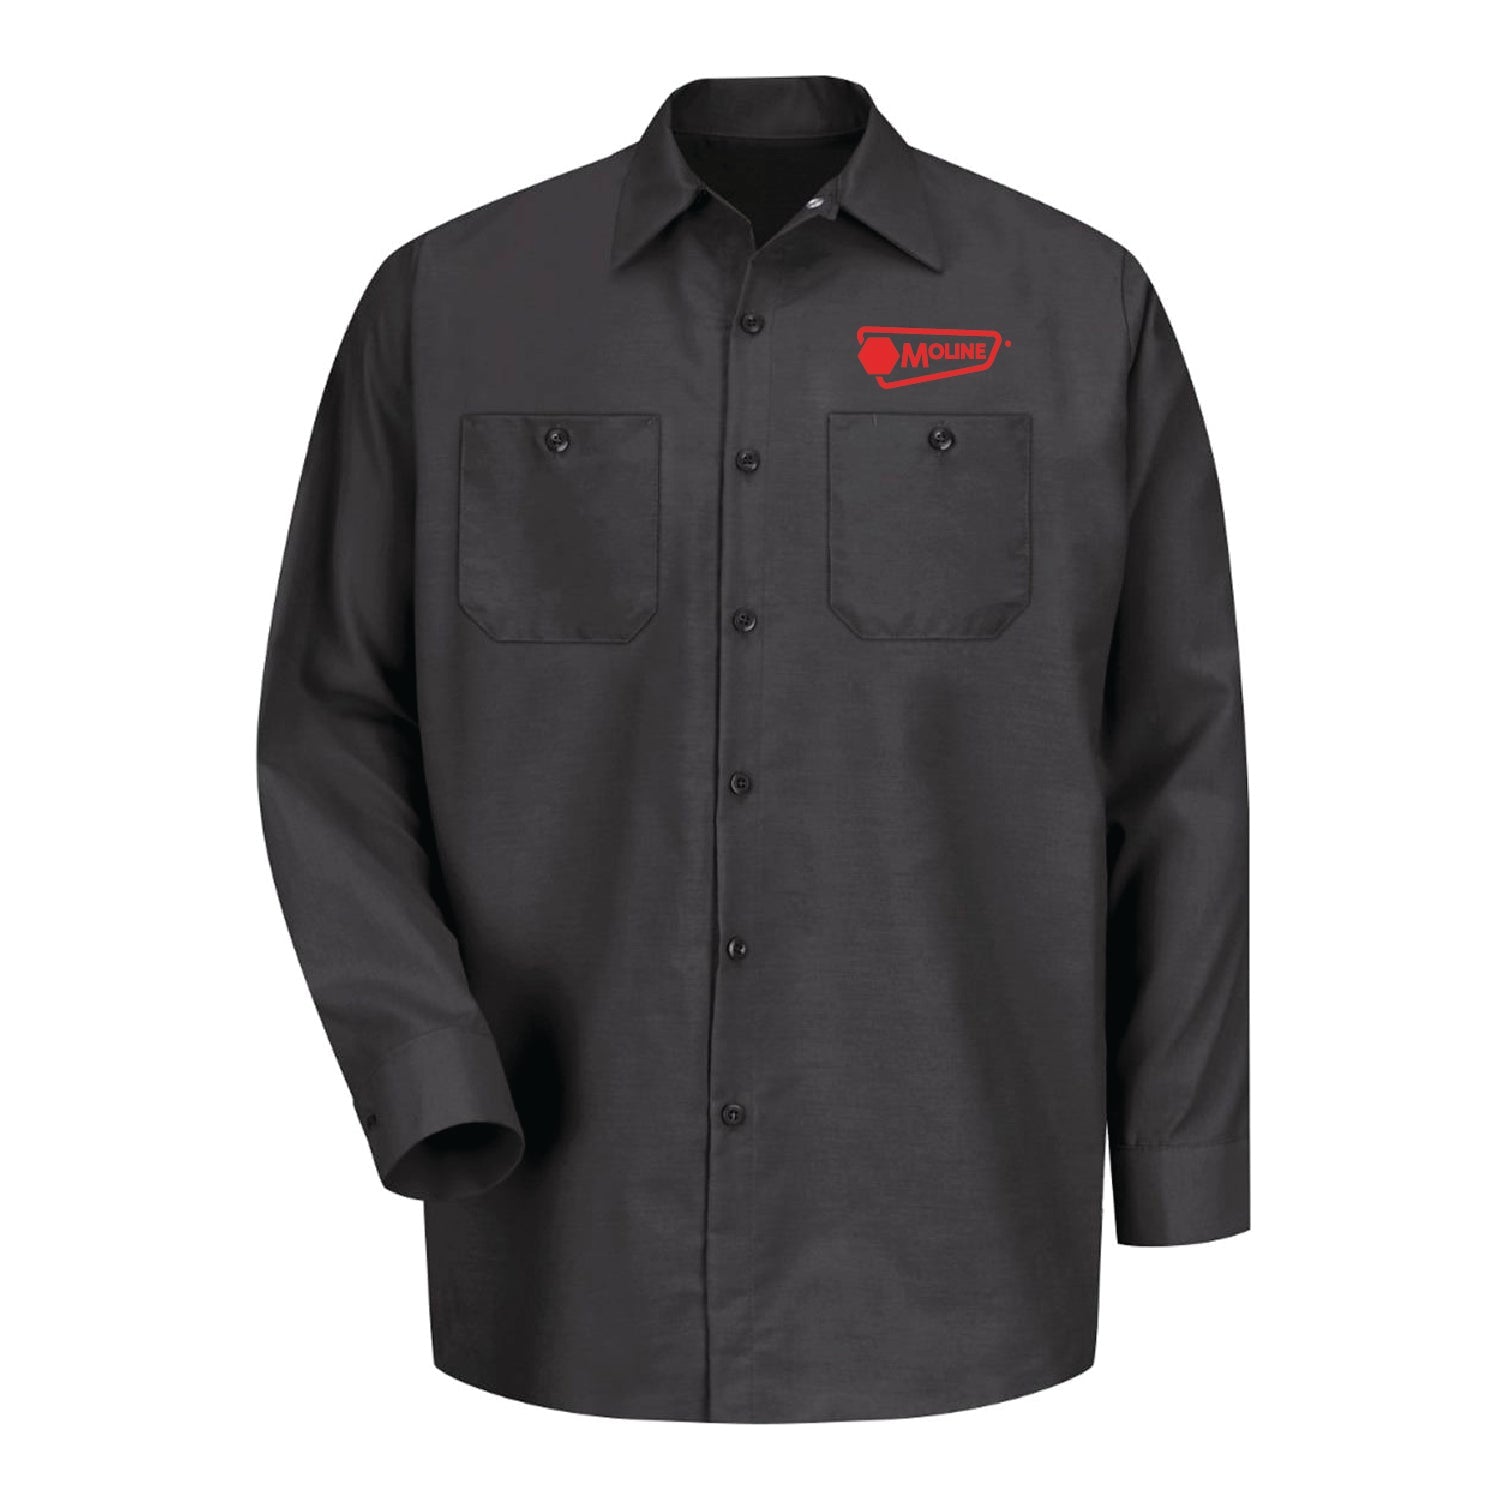 Moline Long Sleeve Work Shirt - DSP On Demand